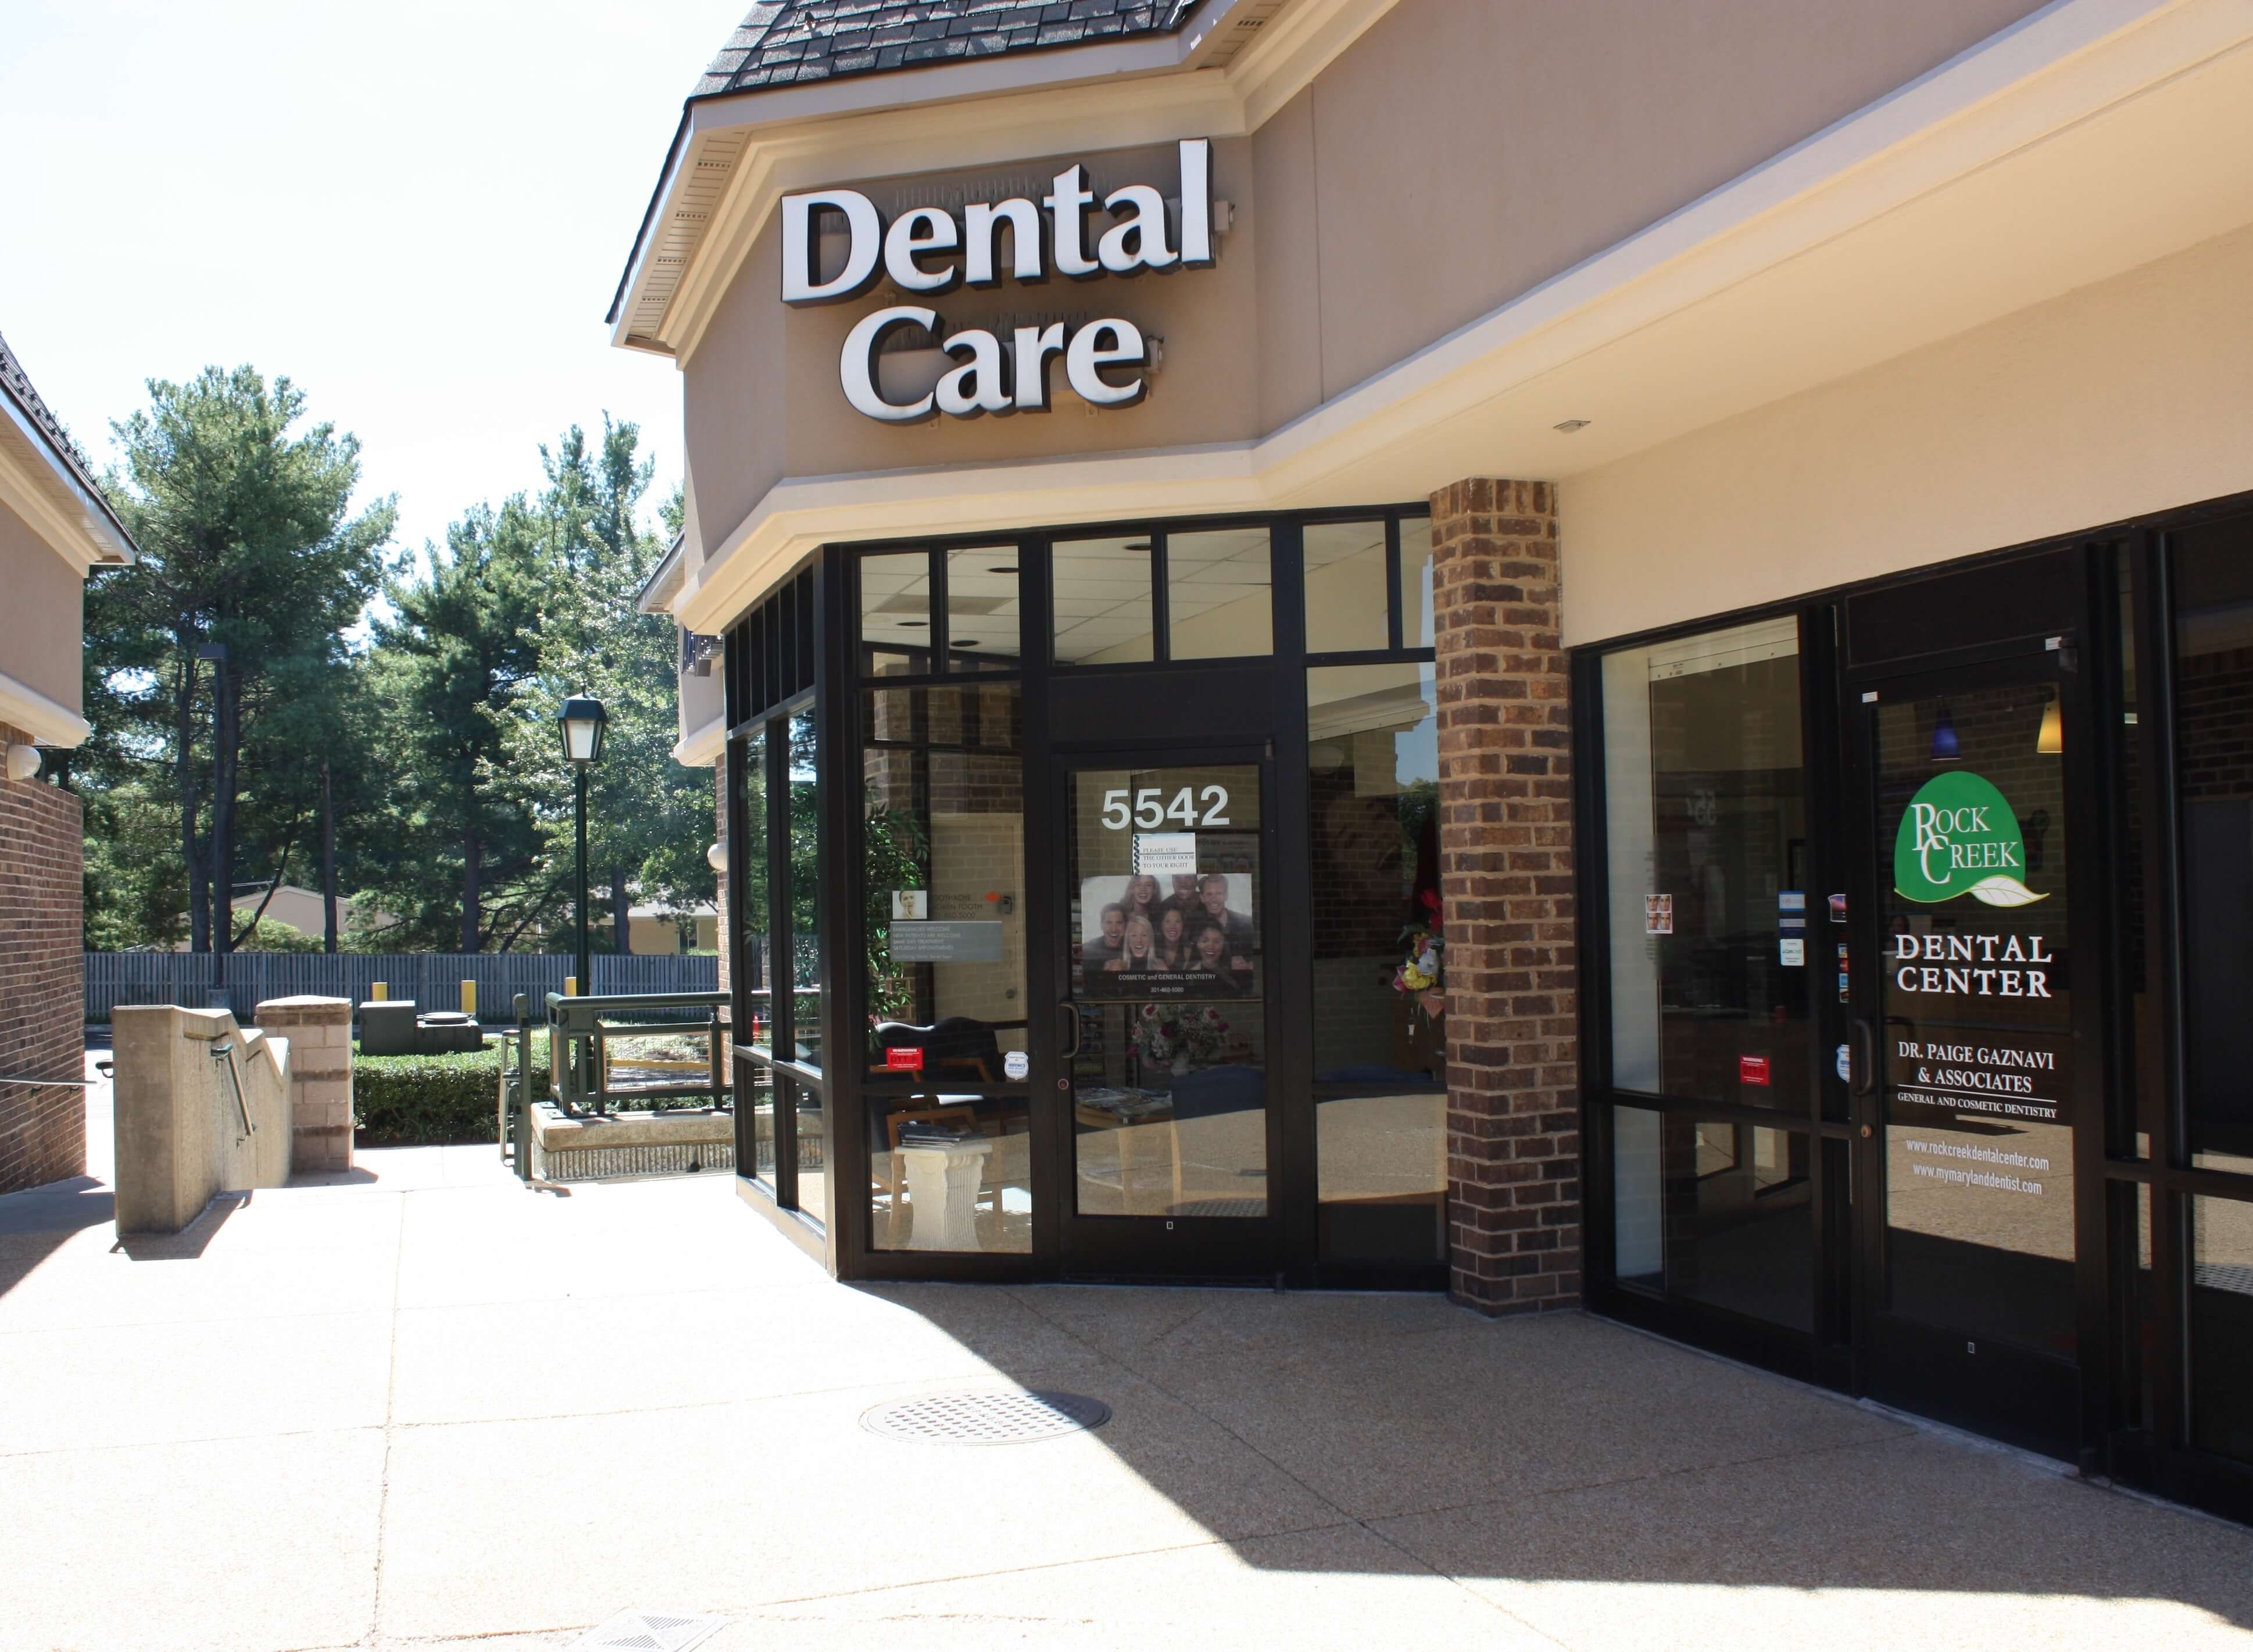 Rock Creek Dental Center